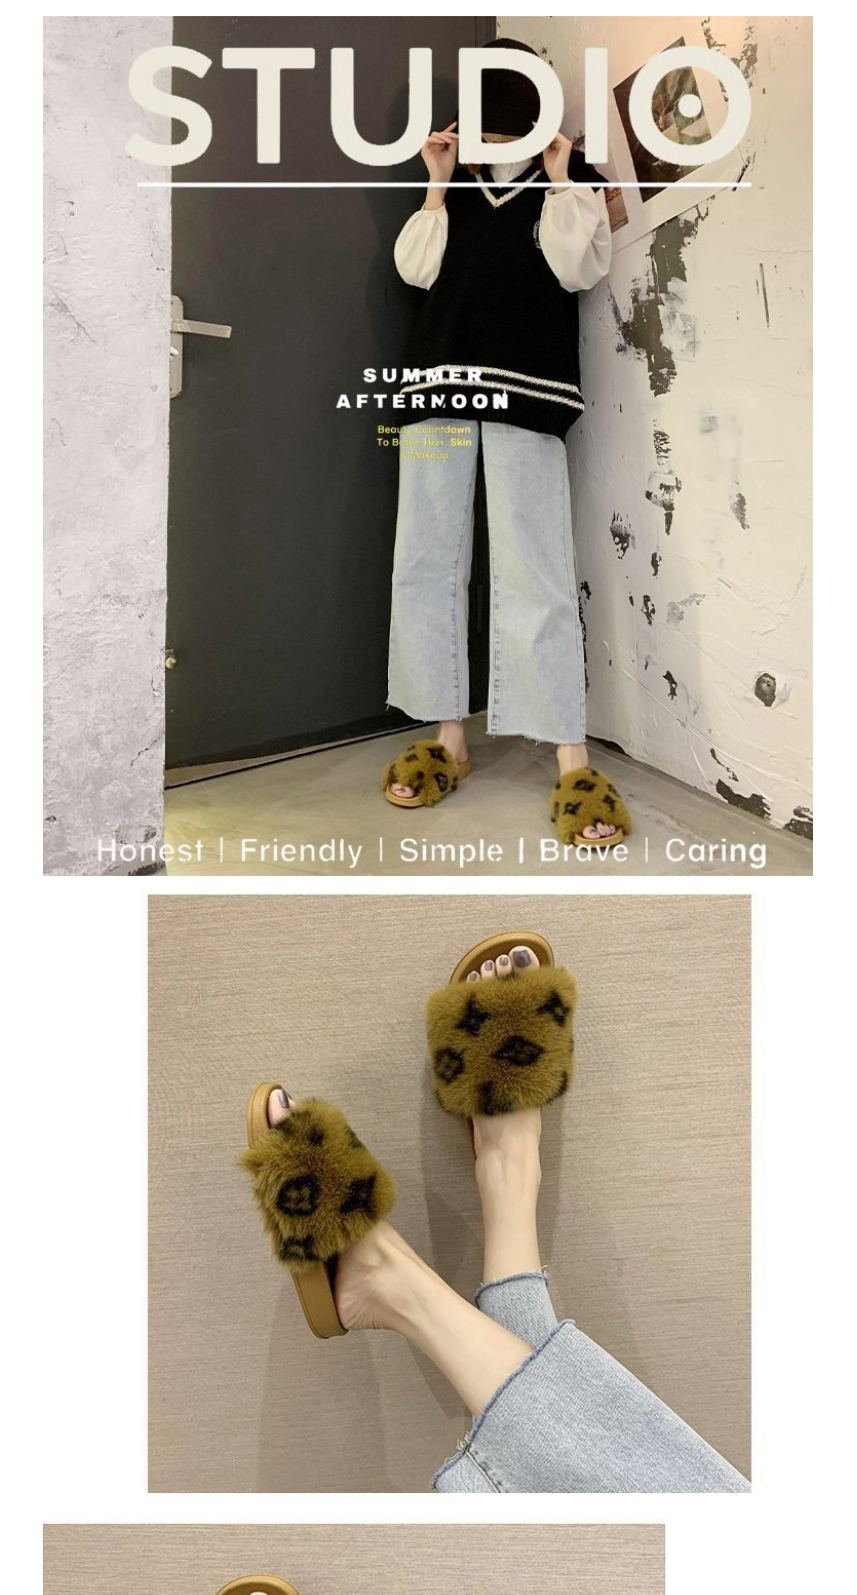 Fashion Beige Leopard Print Round Head Flat-bottomed Fur Slippers,Slippers